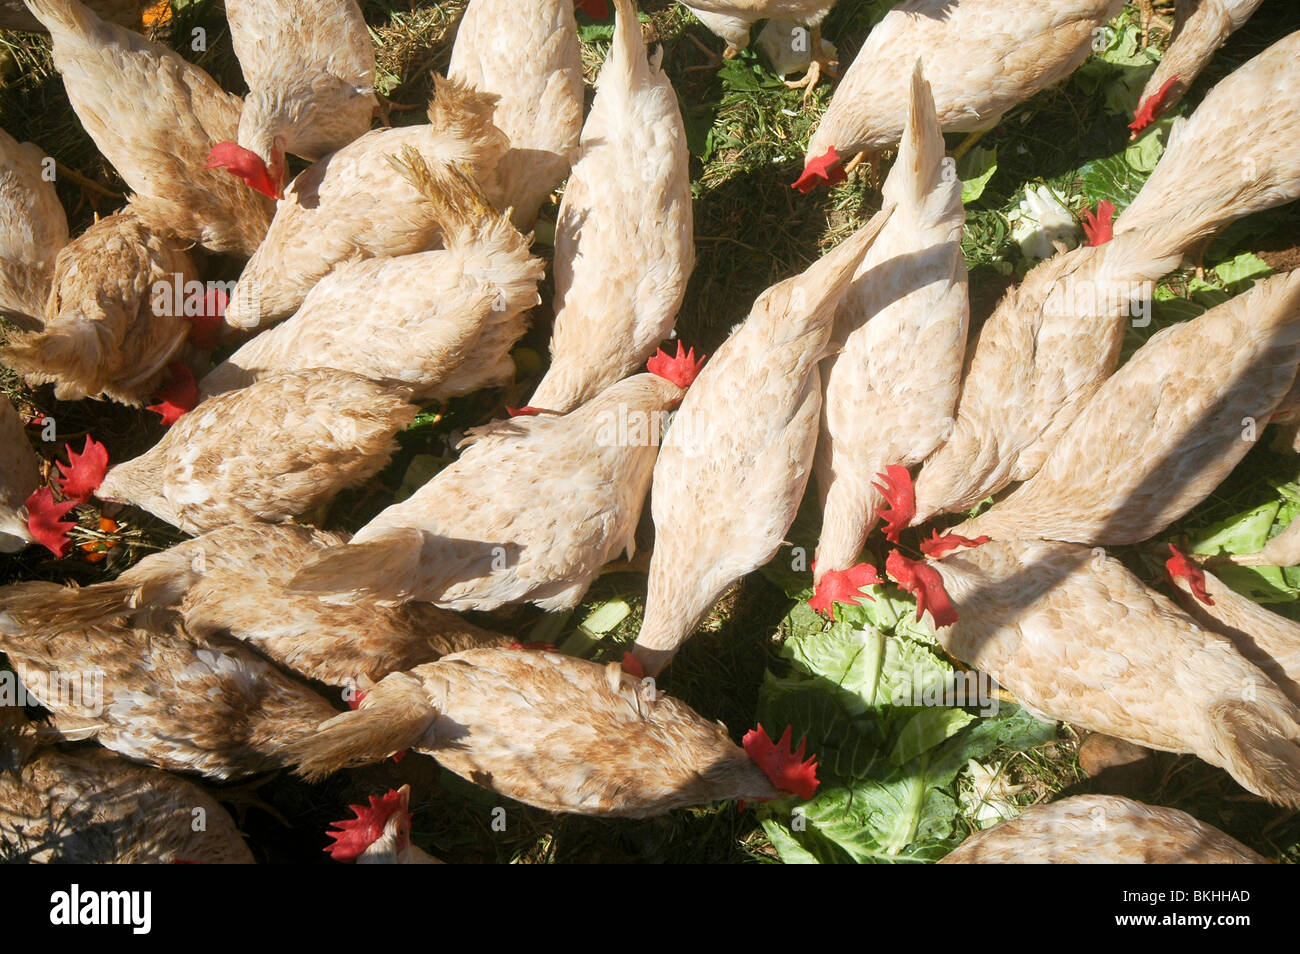 Israel, Öko-Farm, kostenlose Roaming-Hühner Stockfoto